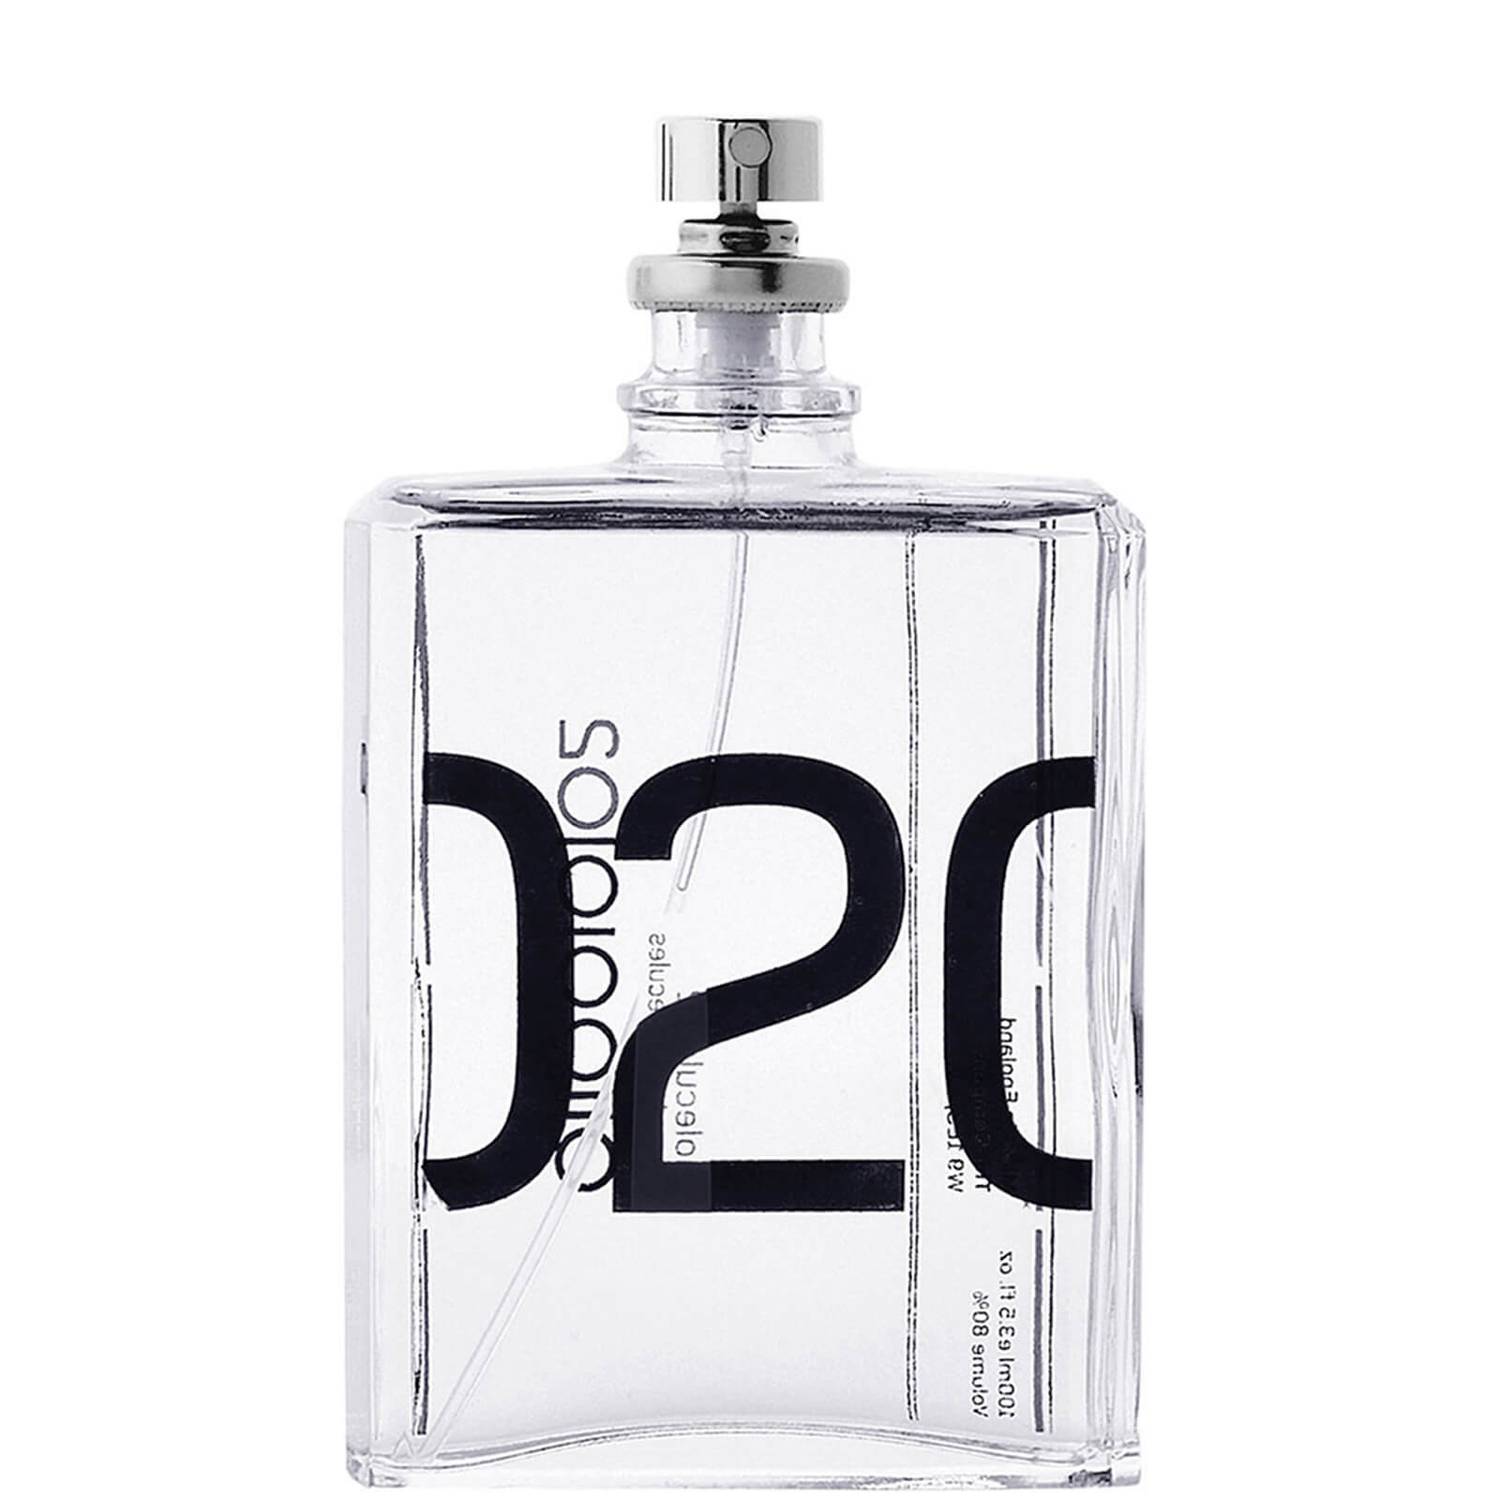 Альтернатива 226 unisex "ESSE fragrance" Niche | Інтернет-магазин Perfumer.ua